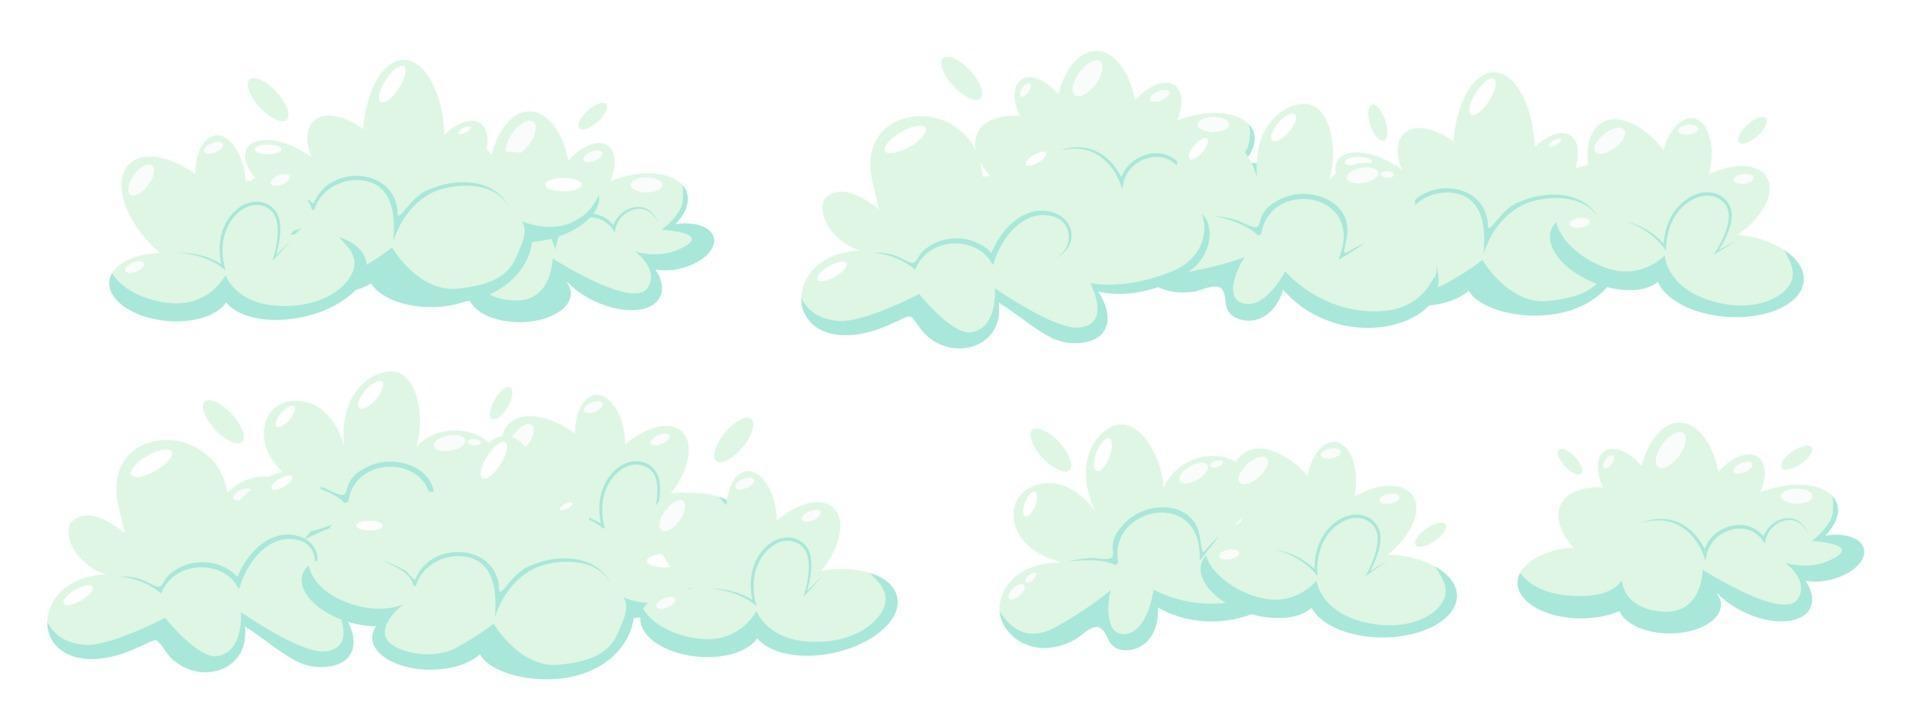 Soap foam with bubbles. Set of cartoon shampoo and soap foam suds. Vector illustration